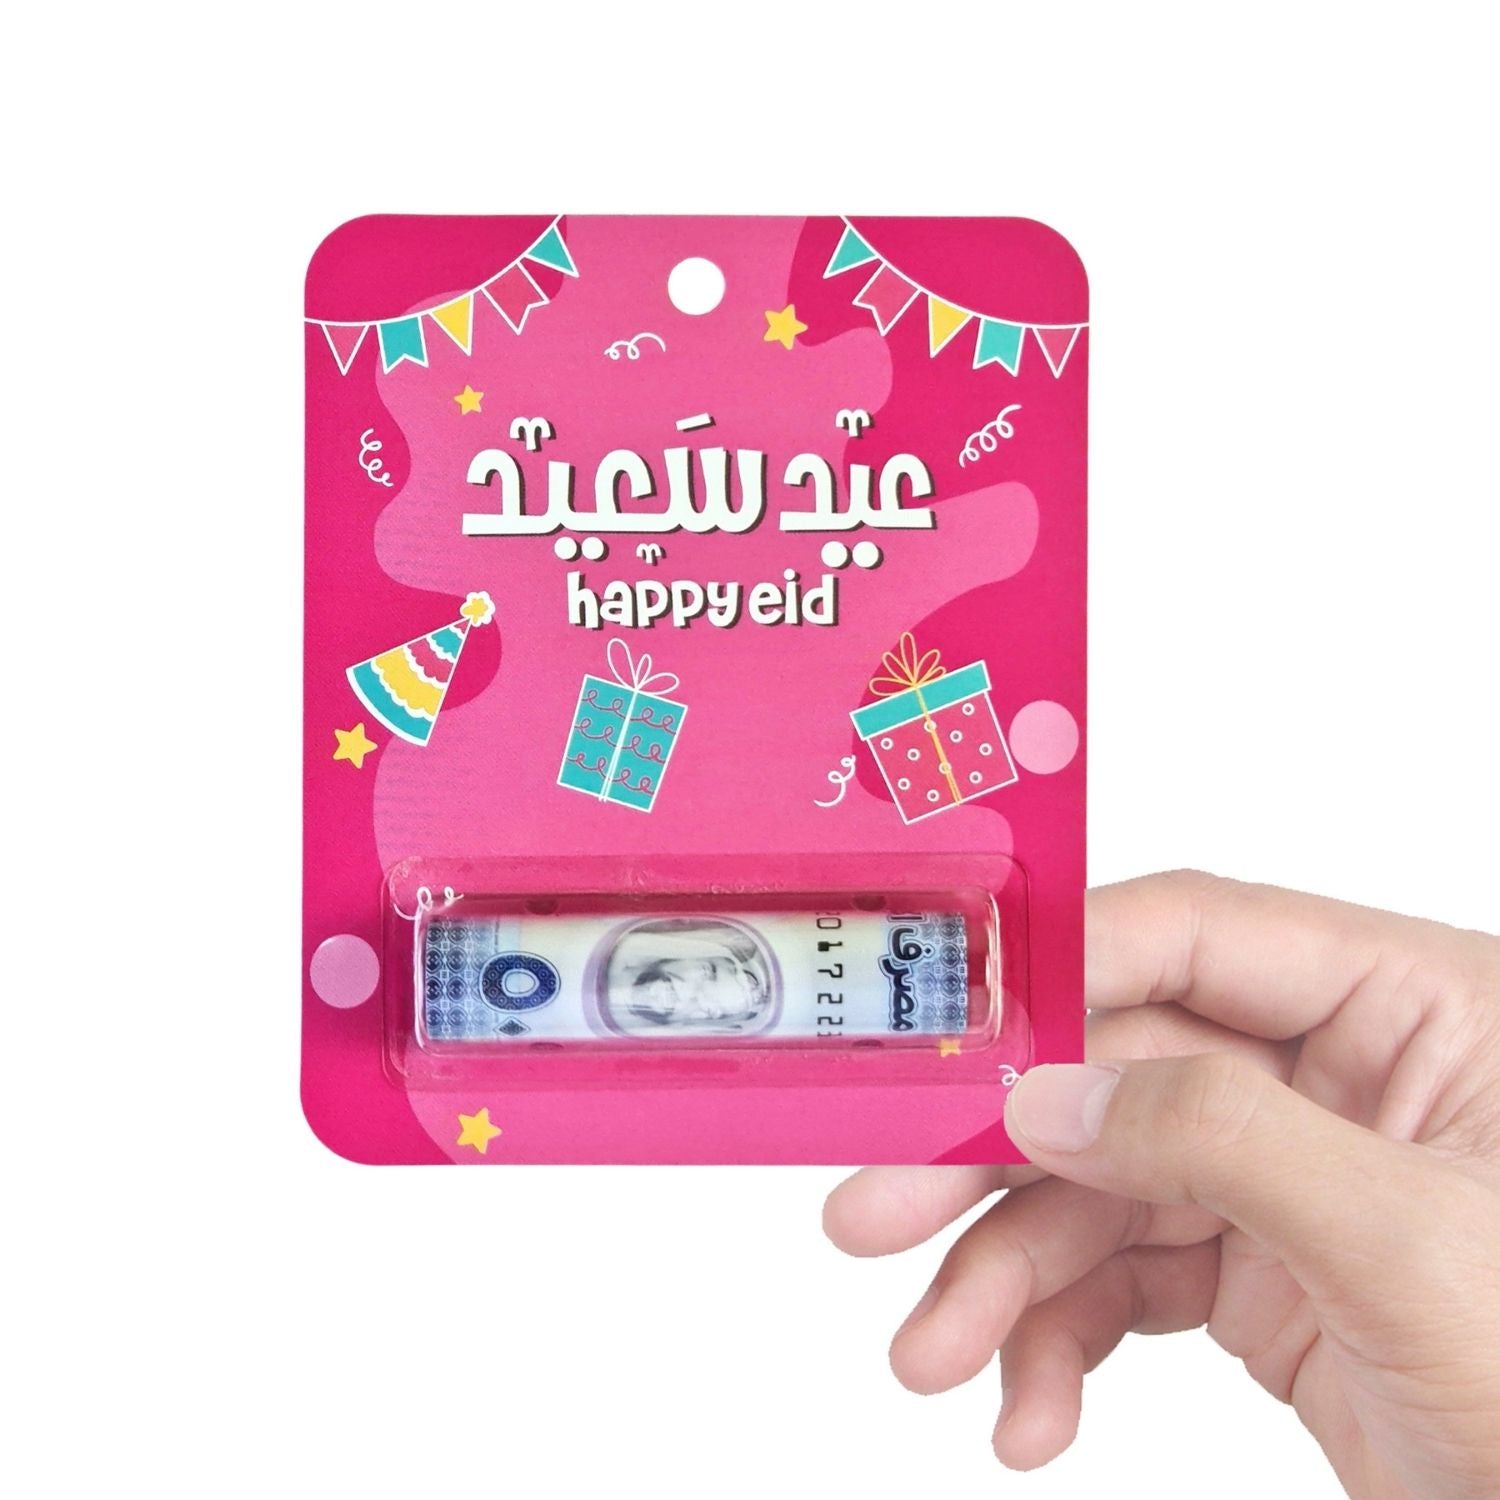 Eidiya Cards - Dome Money Cards Holder, Set of 8 Cards